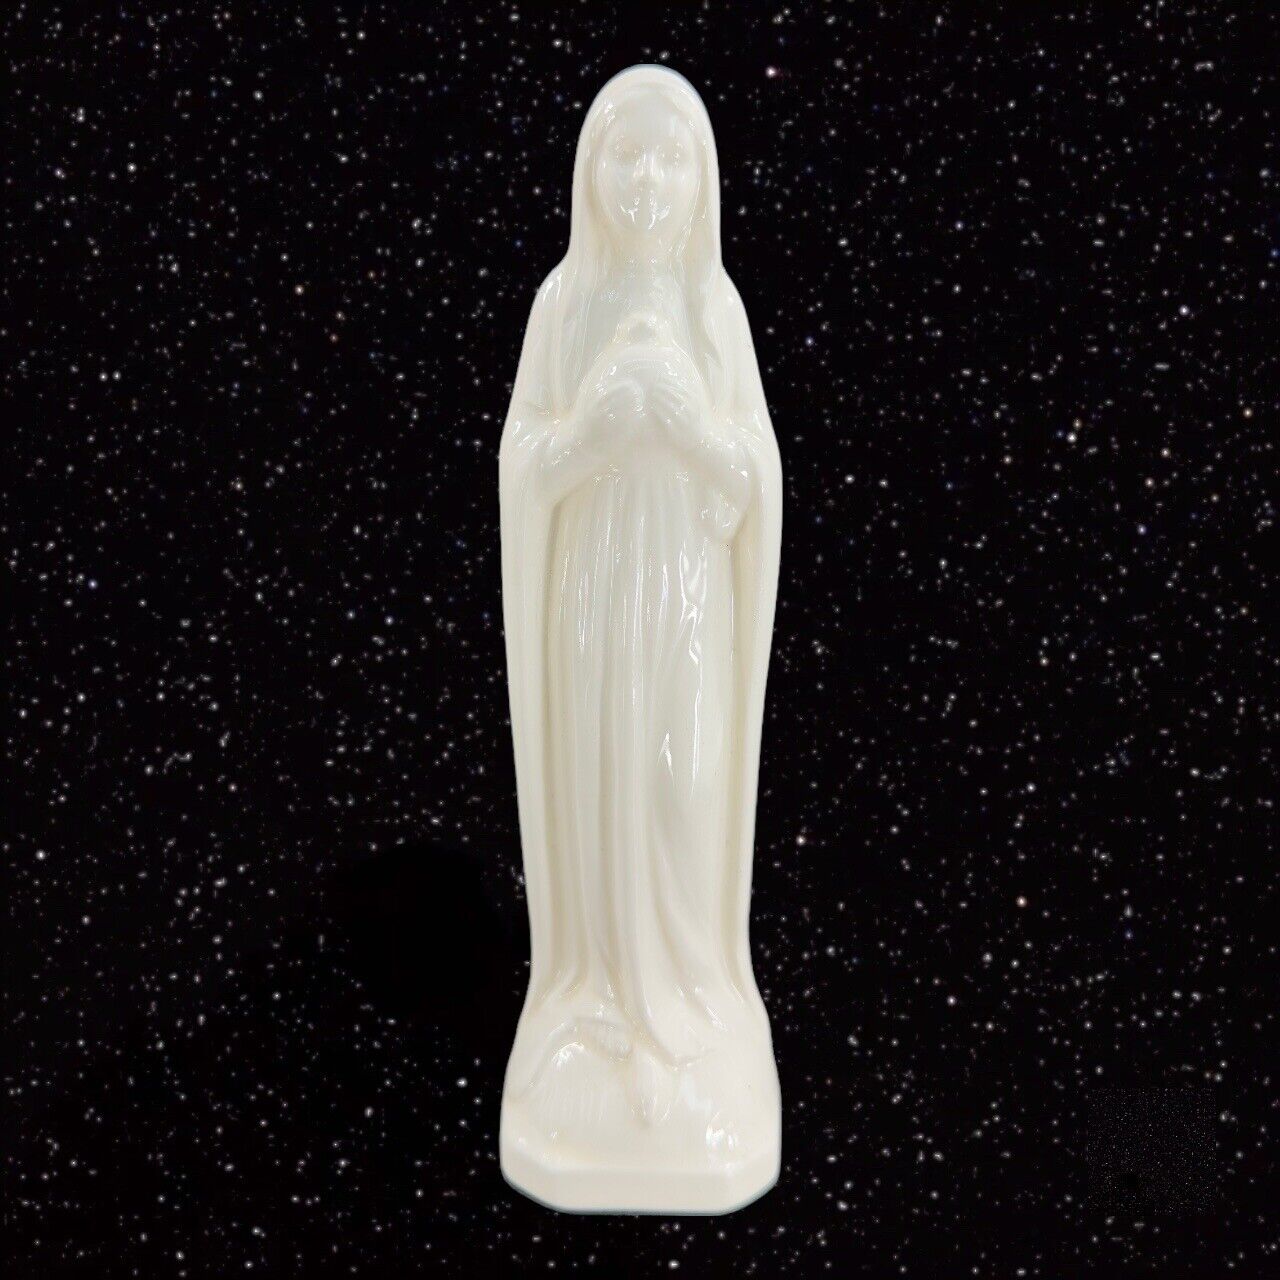 Vintage Sanmyro Japan Porcelain Virgin Mary Madonna Religious Figurine Ceramic